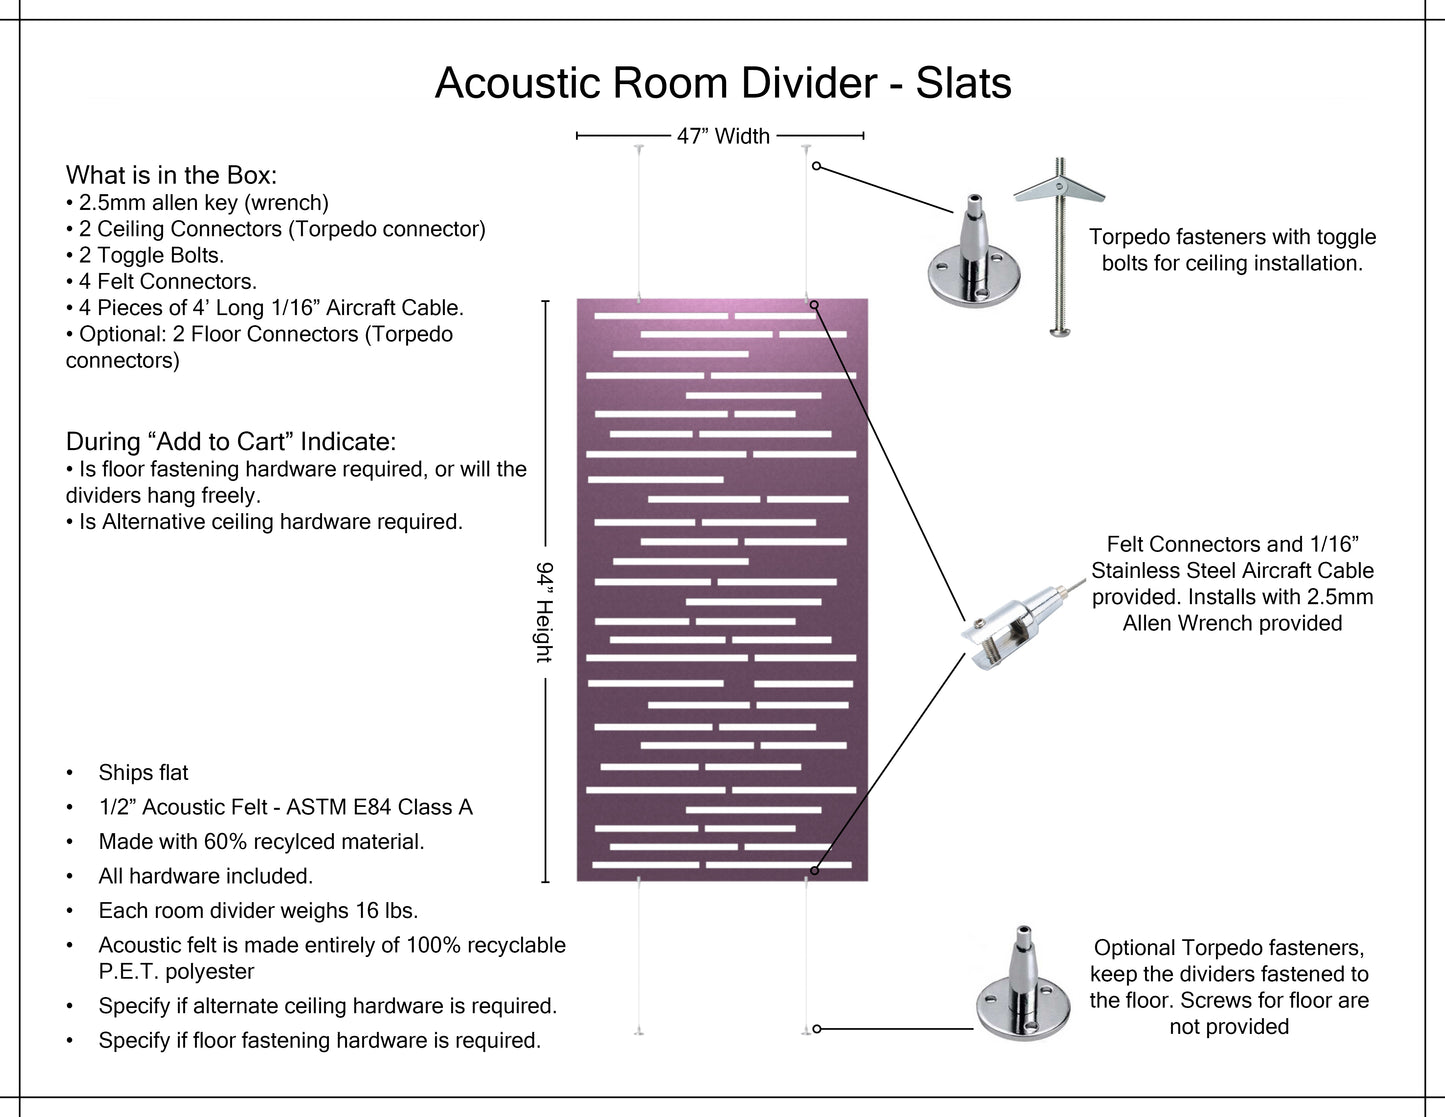 4x8 Acoustic Room Divider - Slats